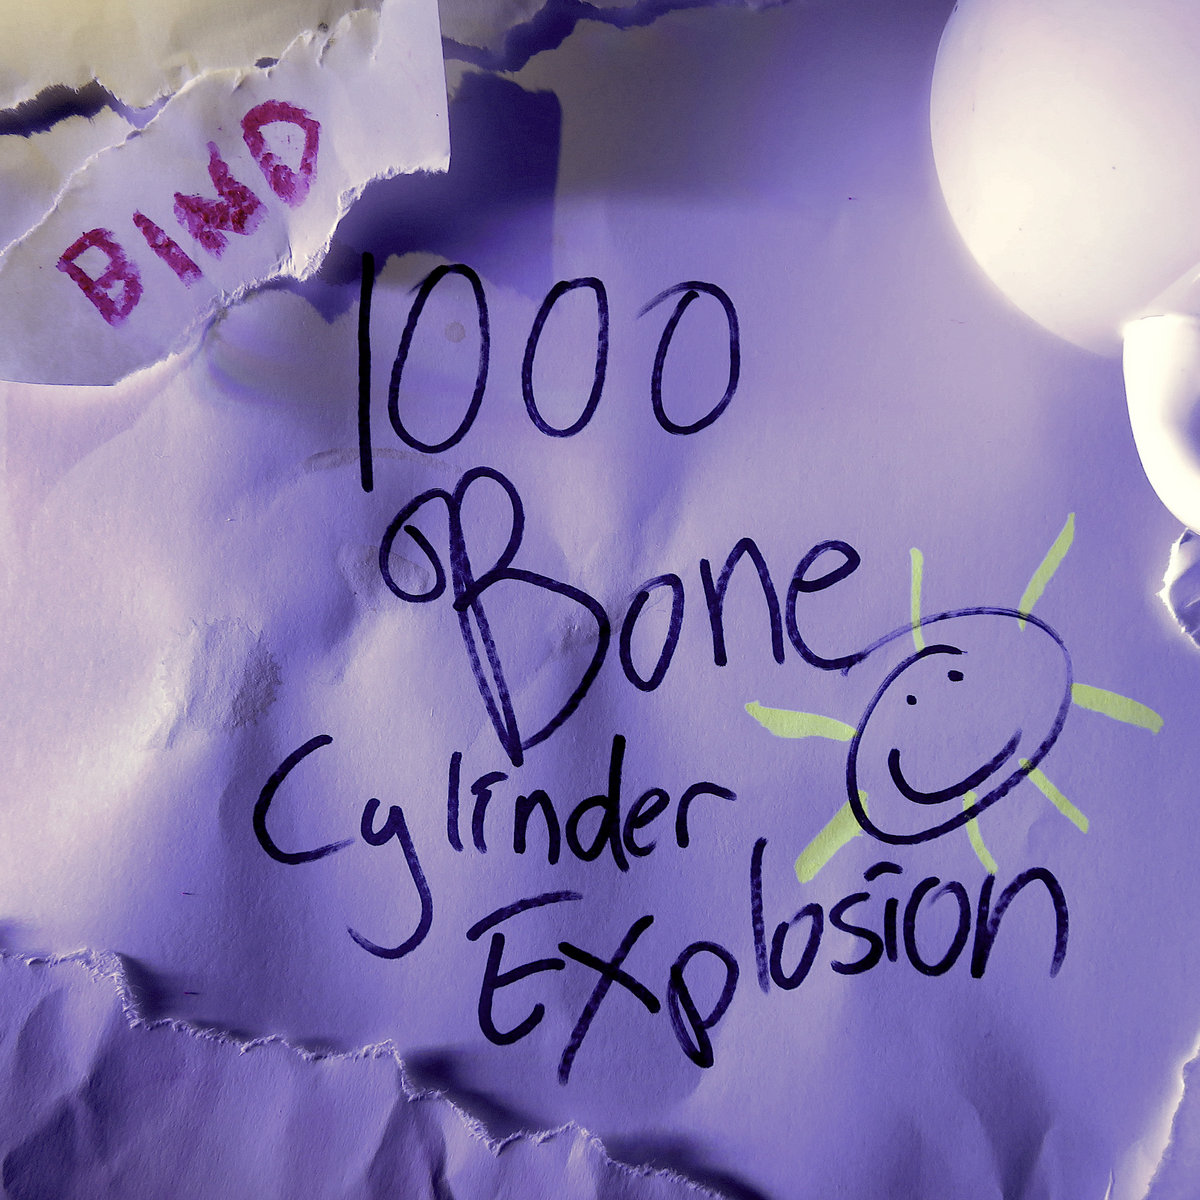 1000 Bone Cylinder Explosion – Bind Review